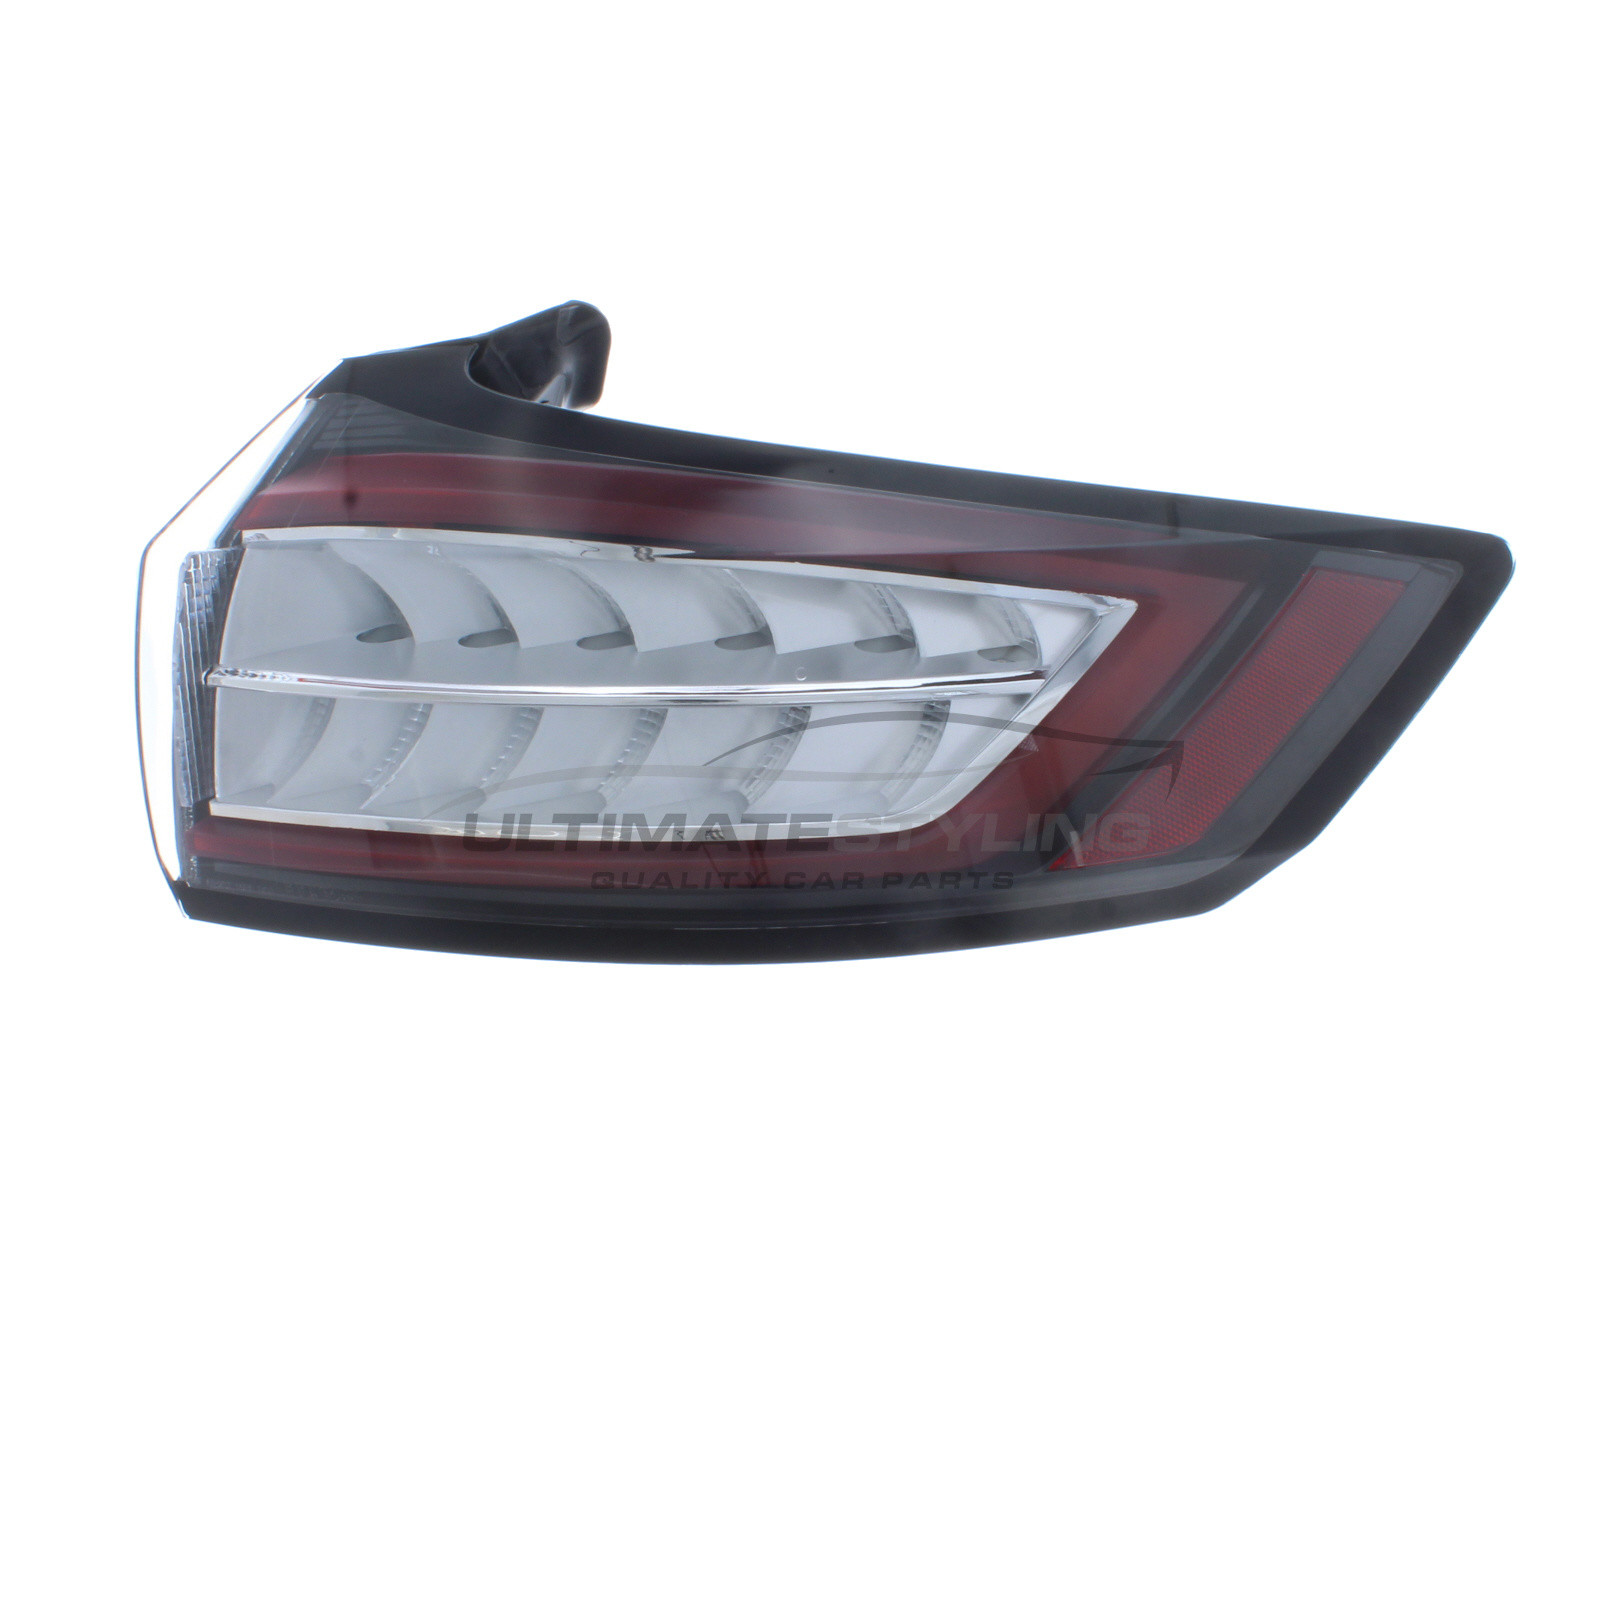 Rear Light / Tail Light for Ford Edge